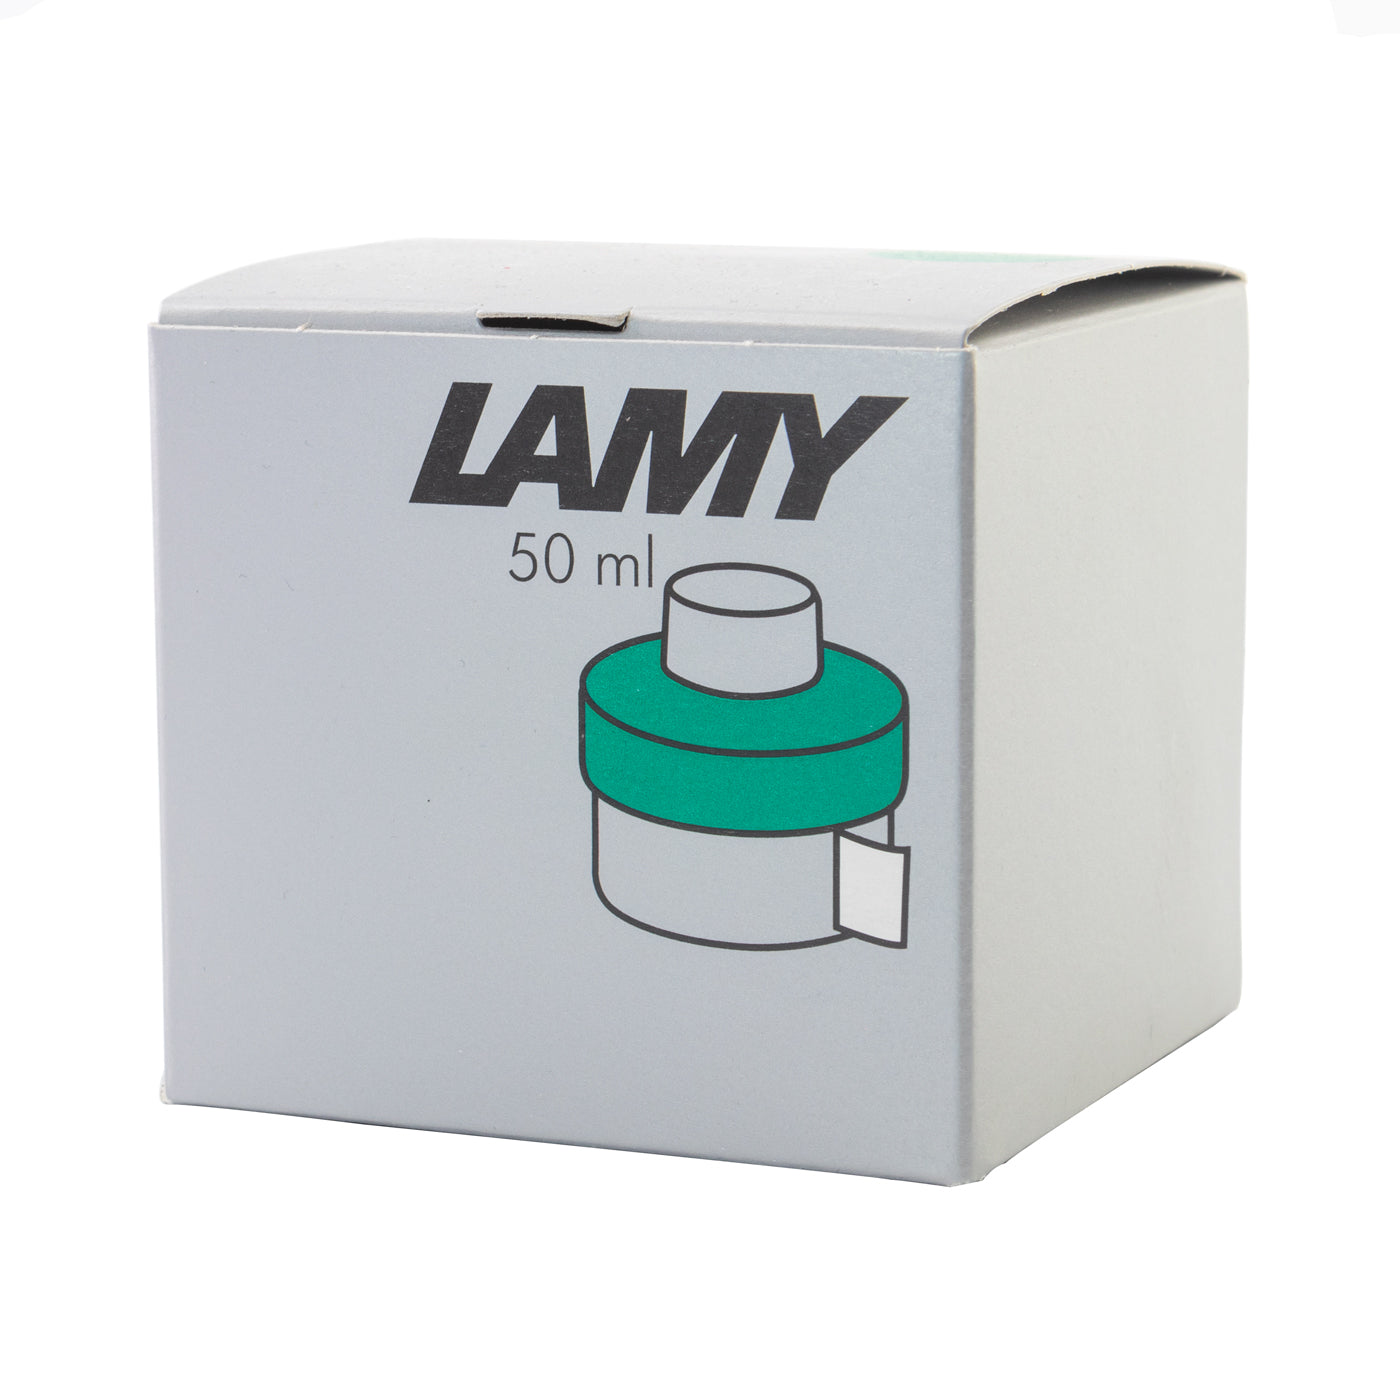 Lamy Ink - Green